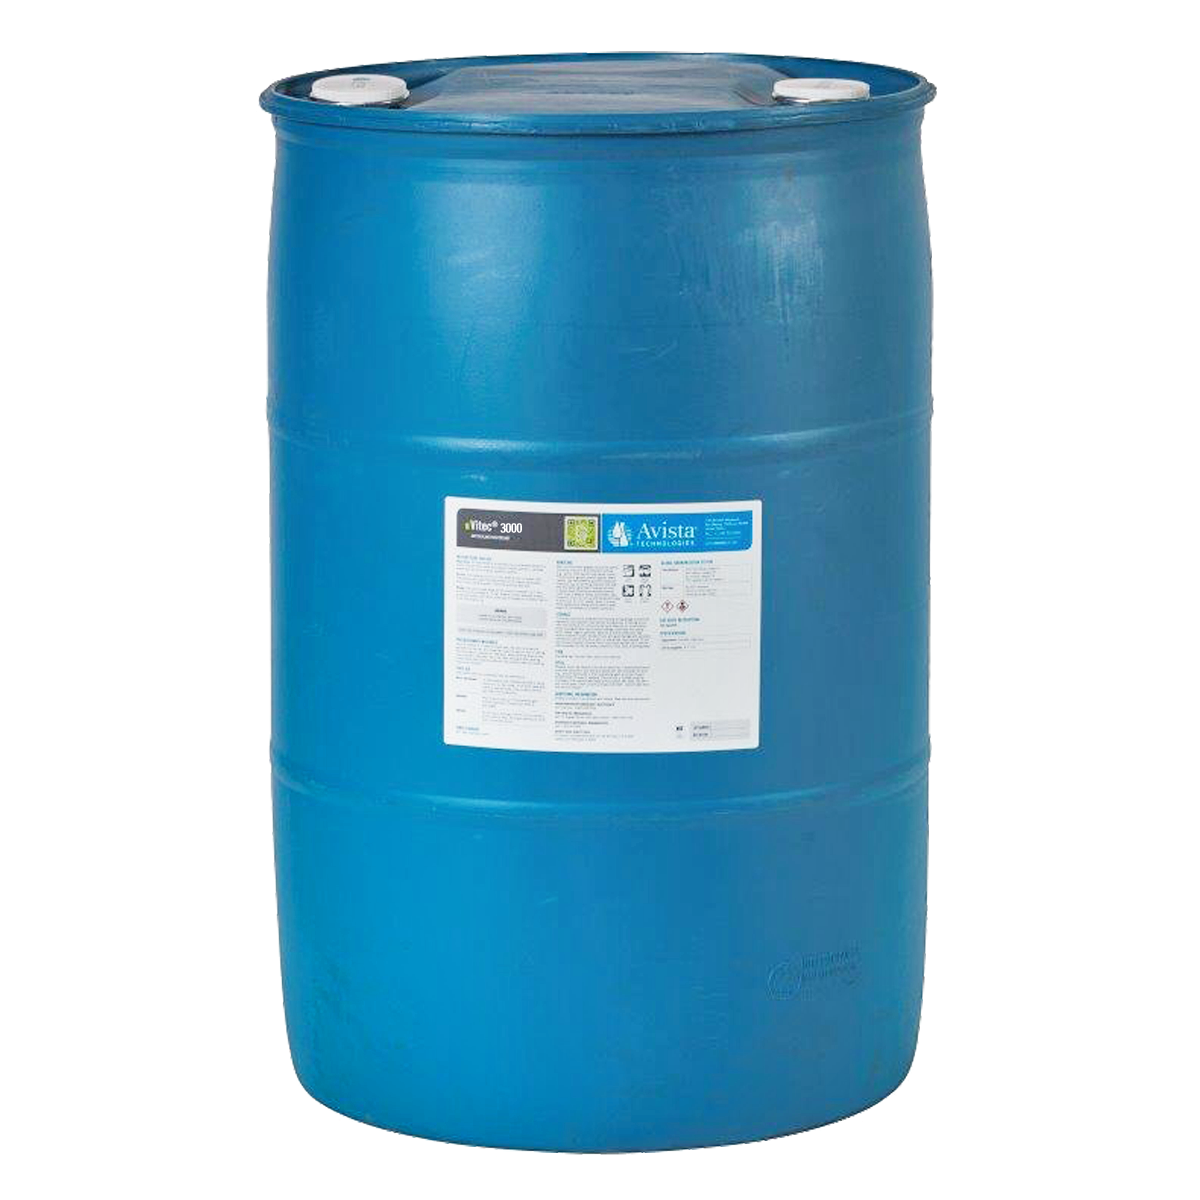 Anti-incrustante Dispersante - Vitec 3000 - 500 lbs (226.80 kg) - AVISTA